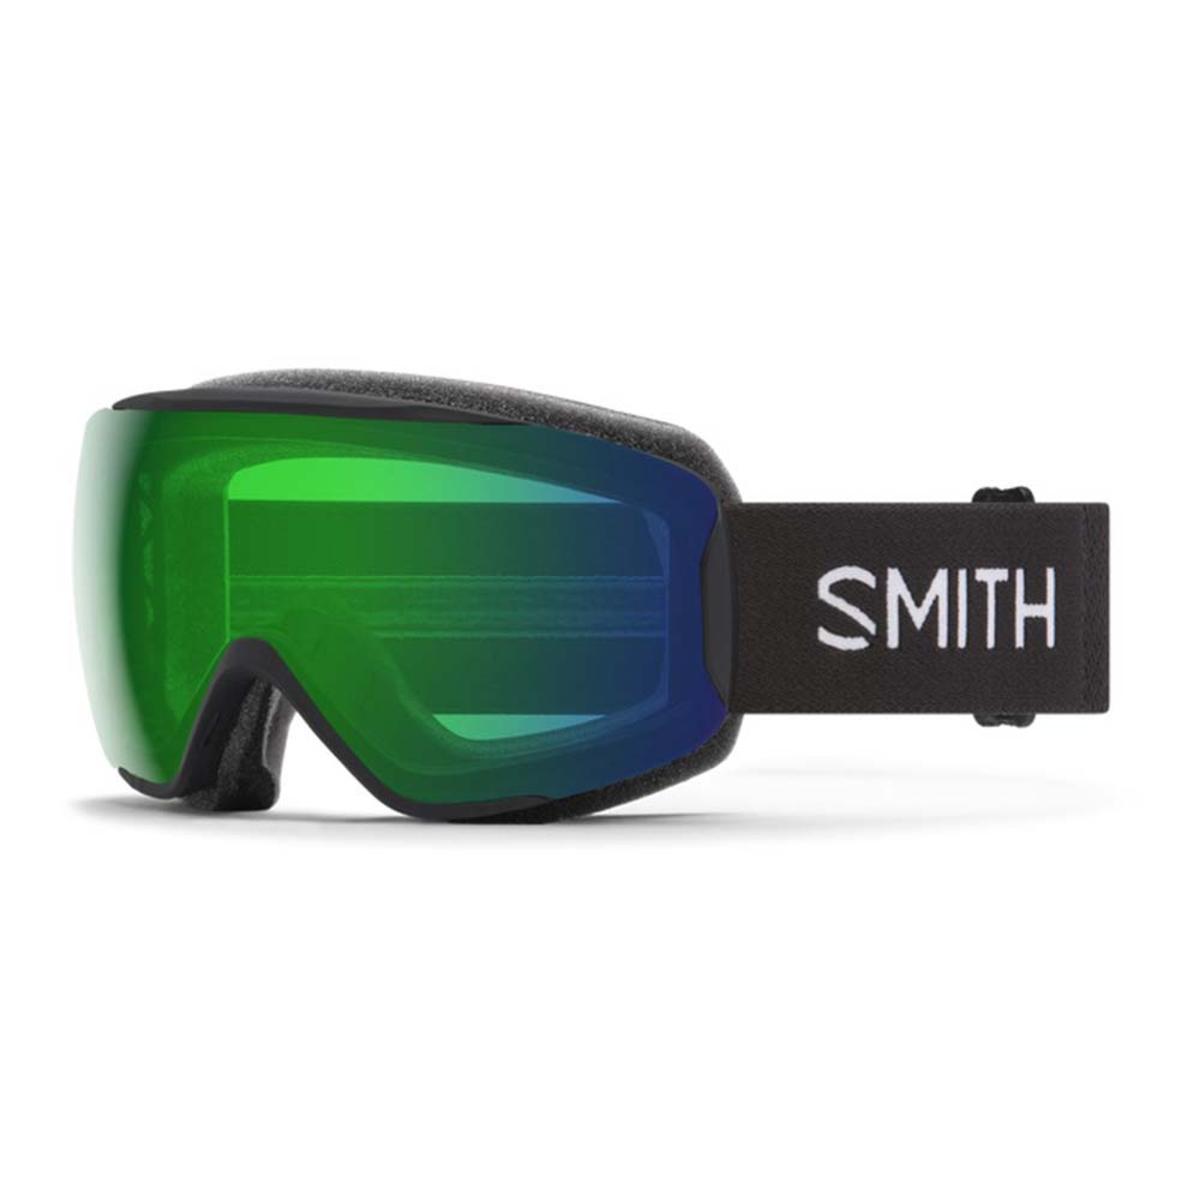 Smith Optics Women's Moment Goggles ChromaPop Everyday Green Mirror - Black Frame